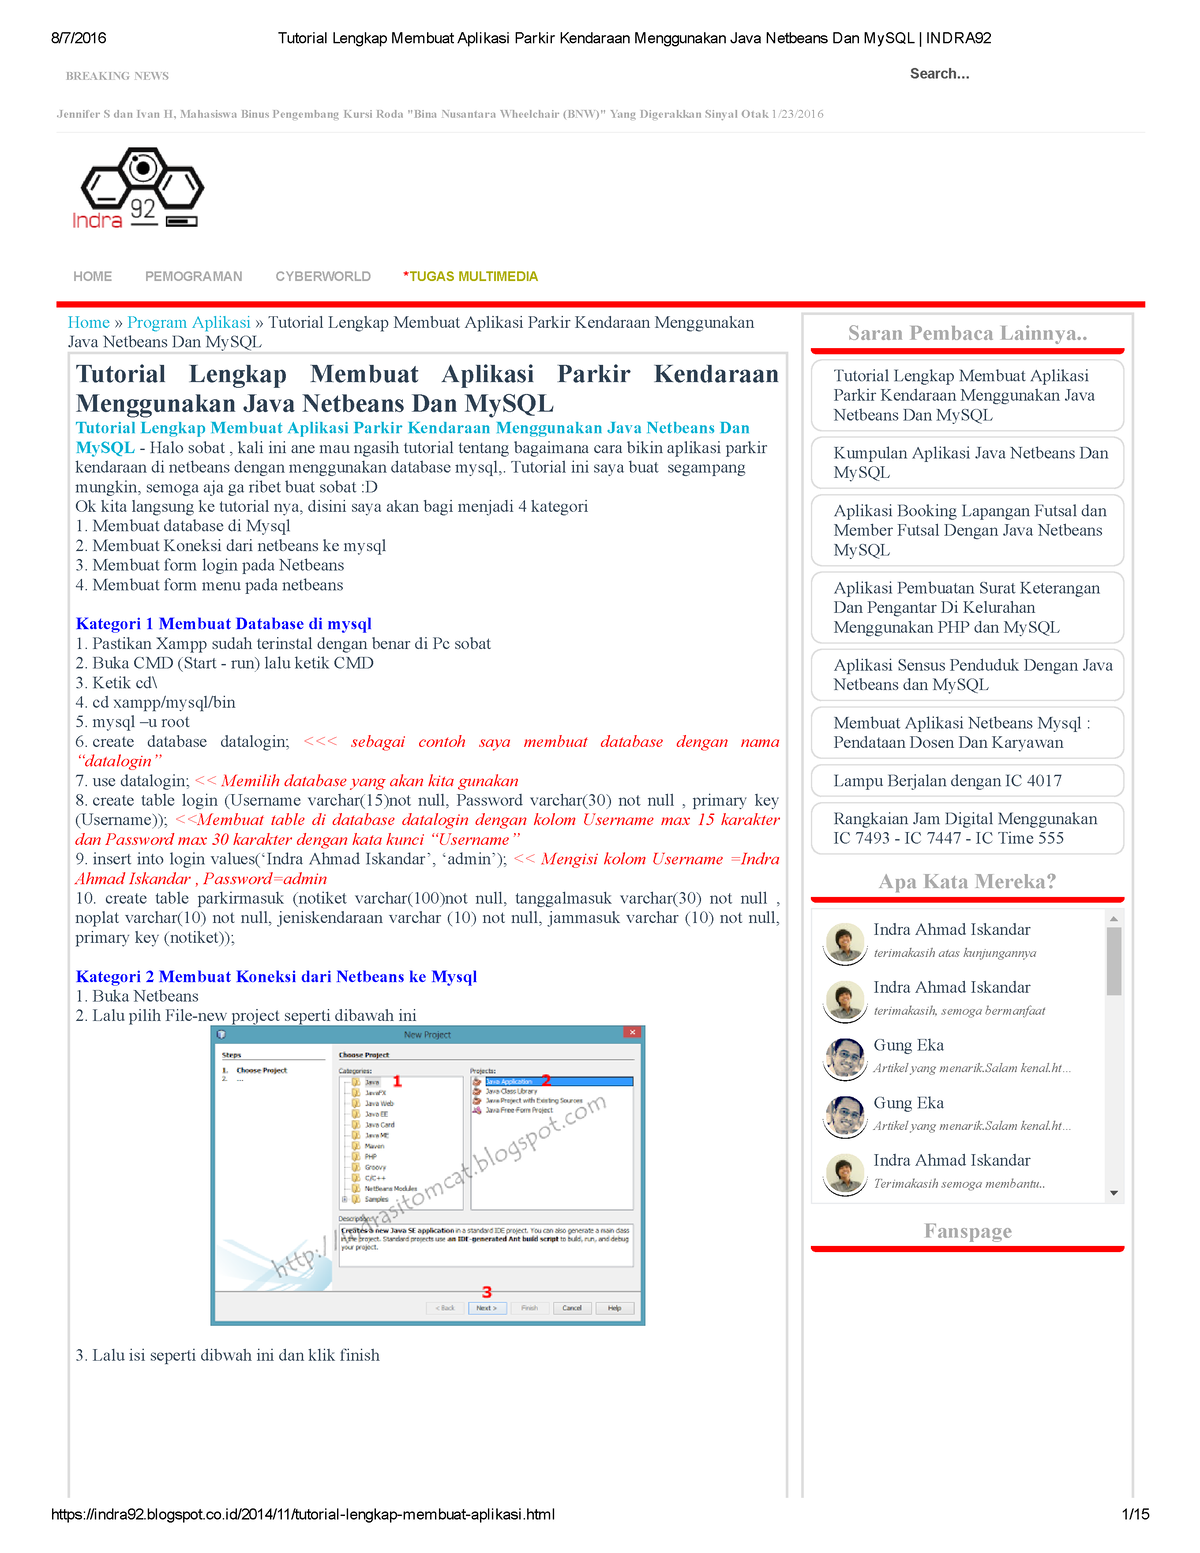 Tutorial Lengkap Membuat Aplikasi Parkir Kendaraan Menggunakan Java Netbeans Dan My Sql Indra 92 6728